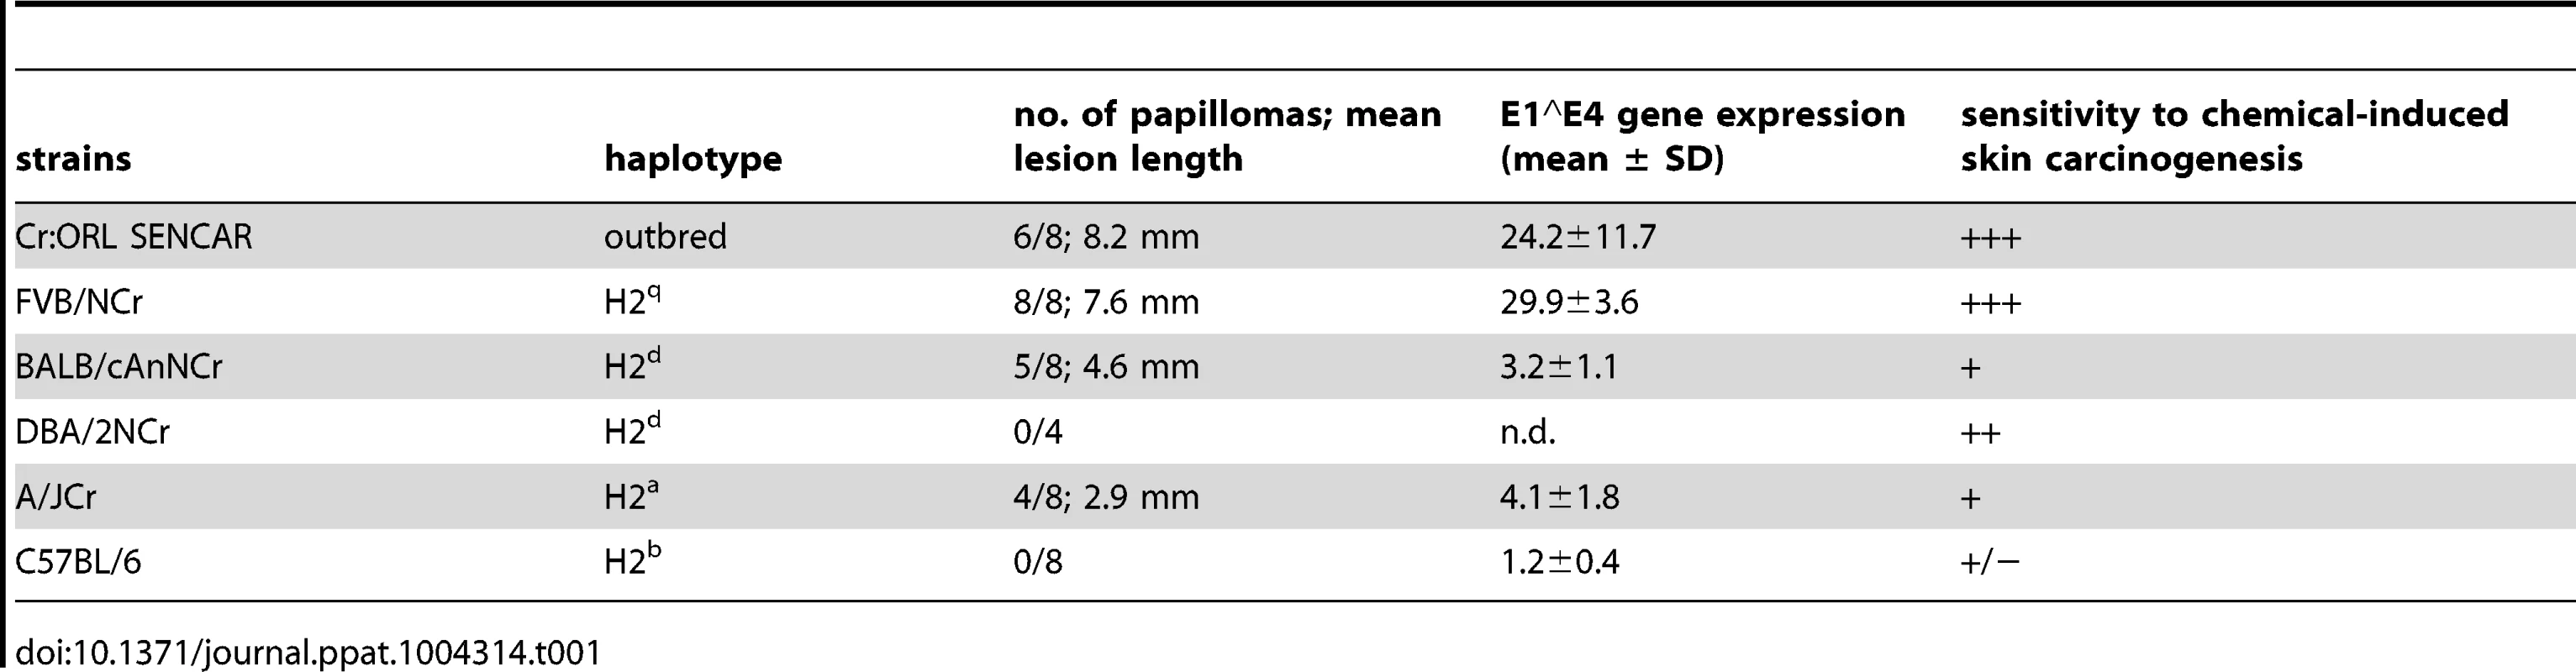 Summary of papilloma development under cyclosporin A treatment in different murine strains.